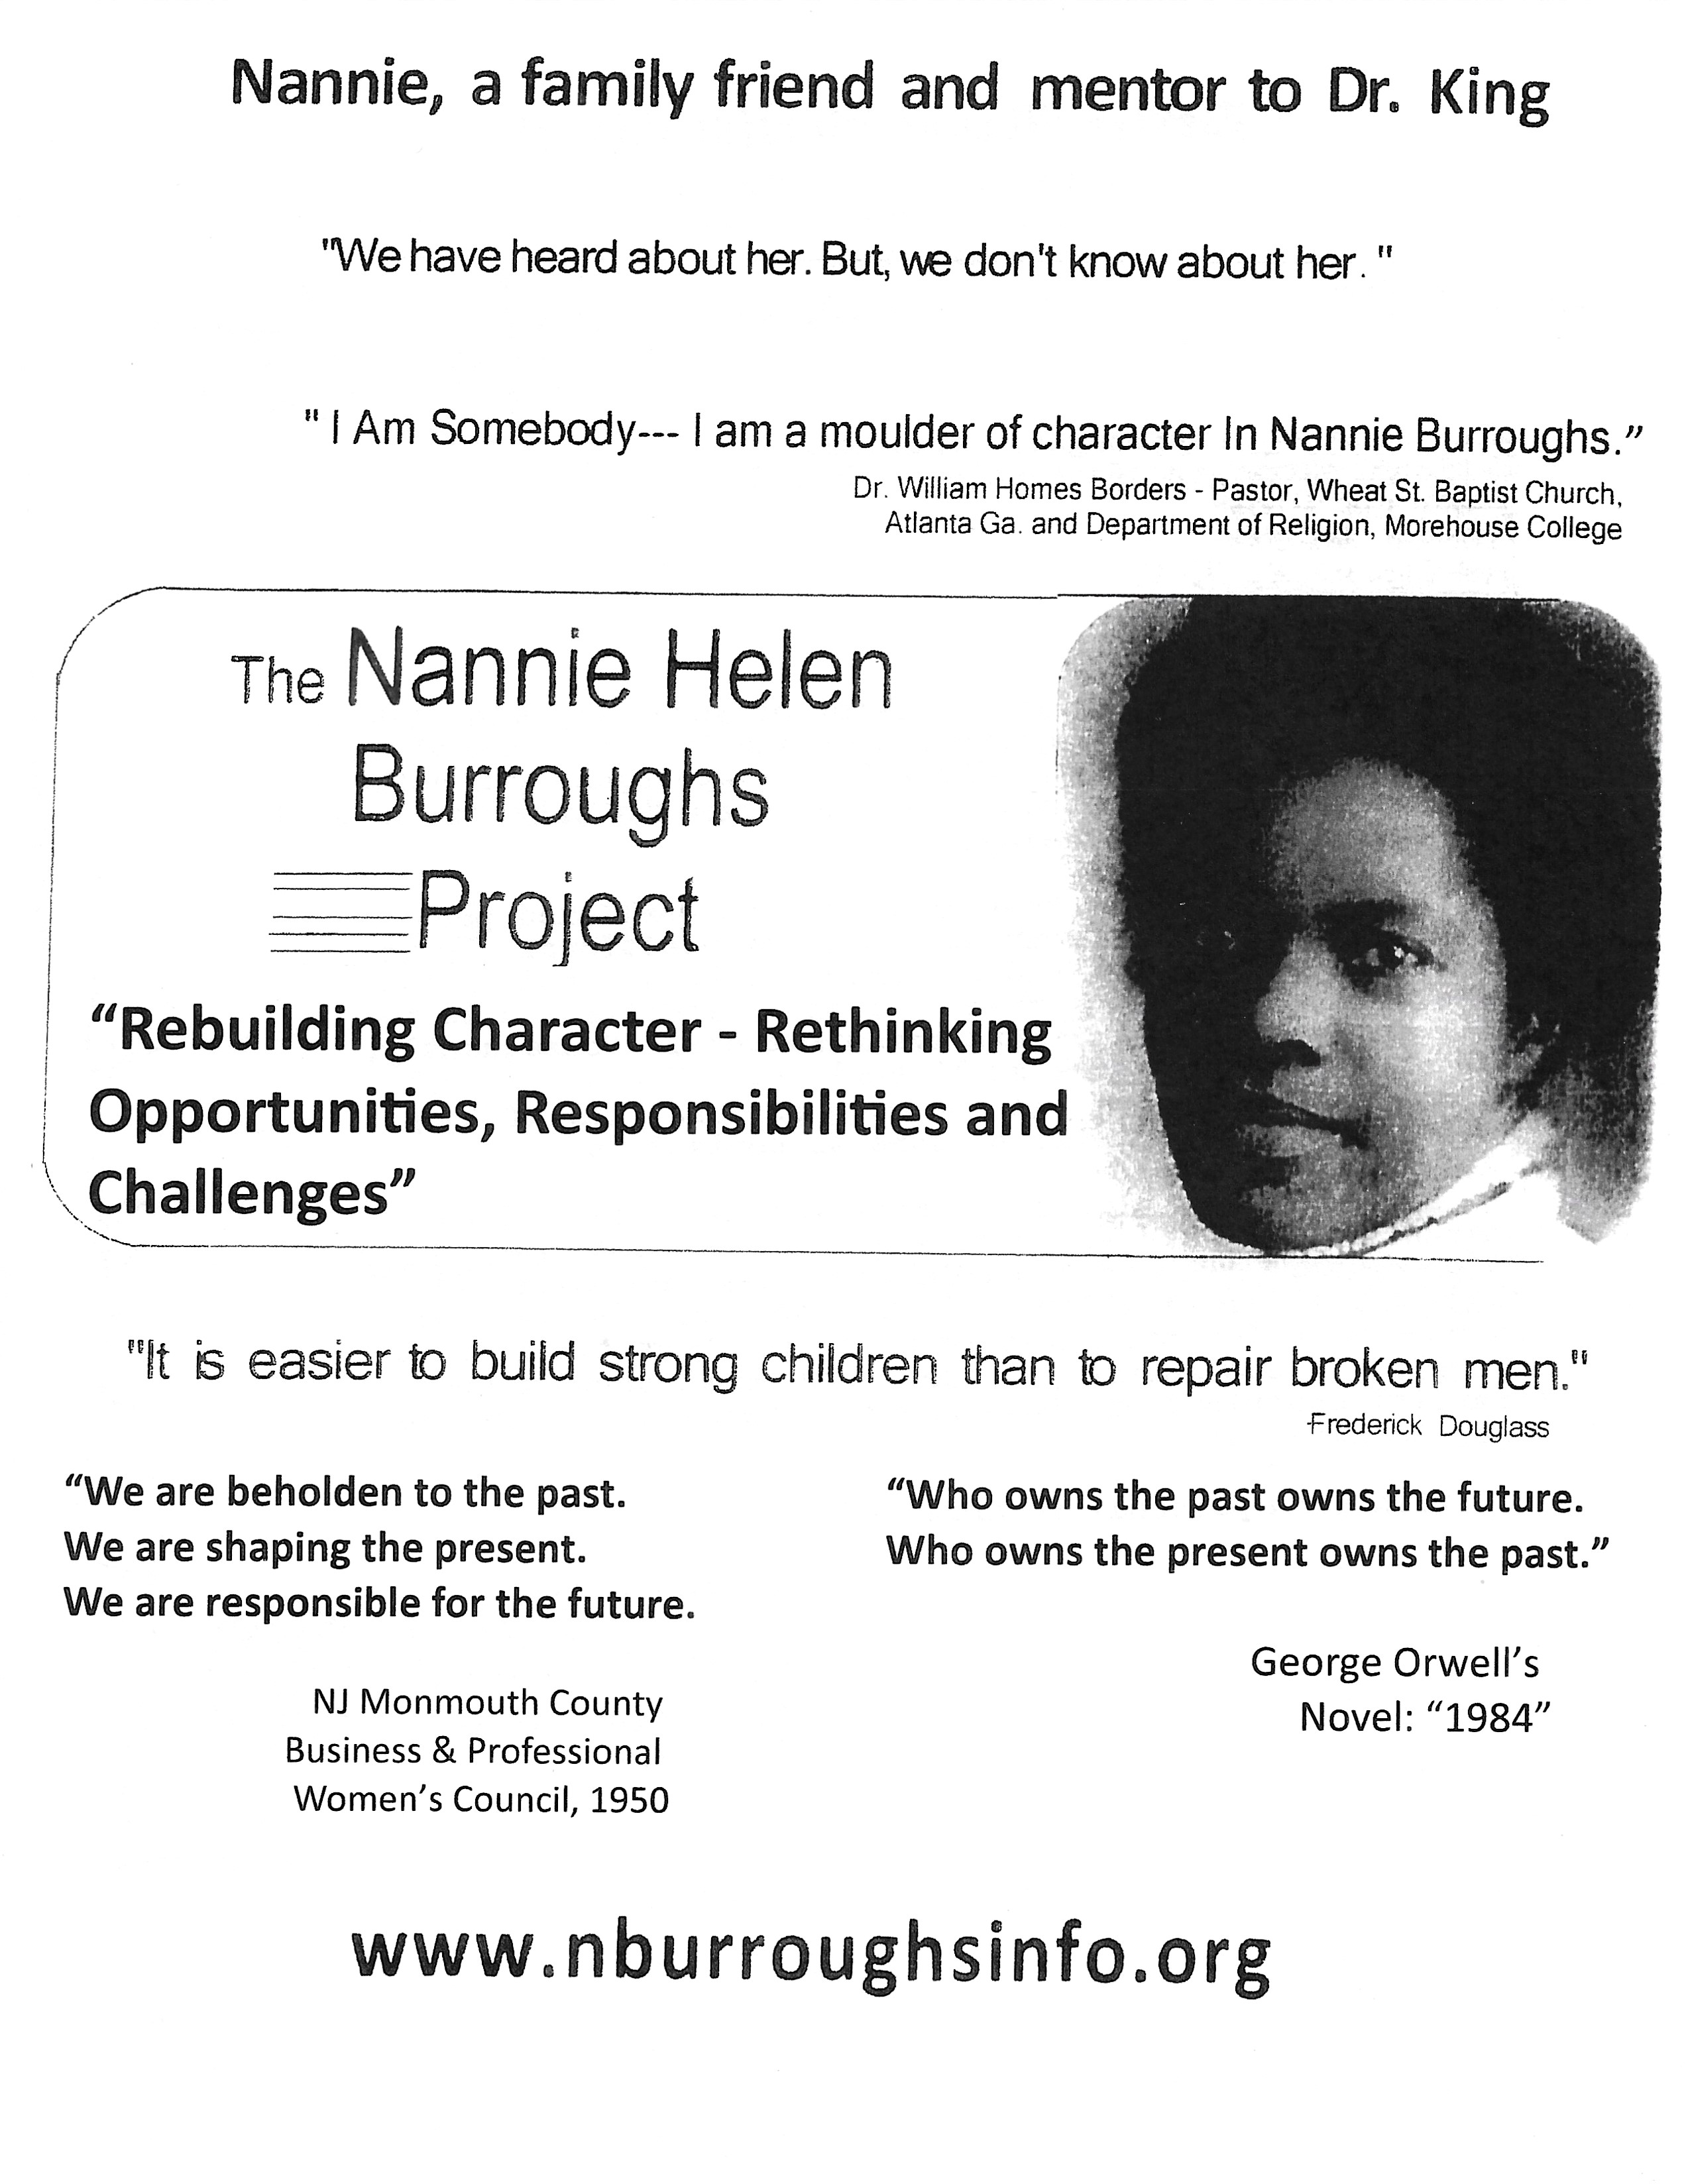 Nannie Helen Burroughs Project